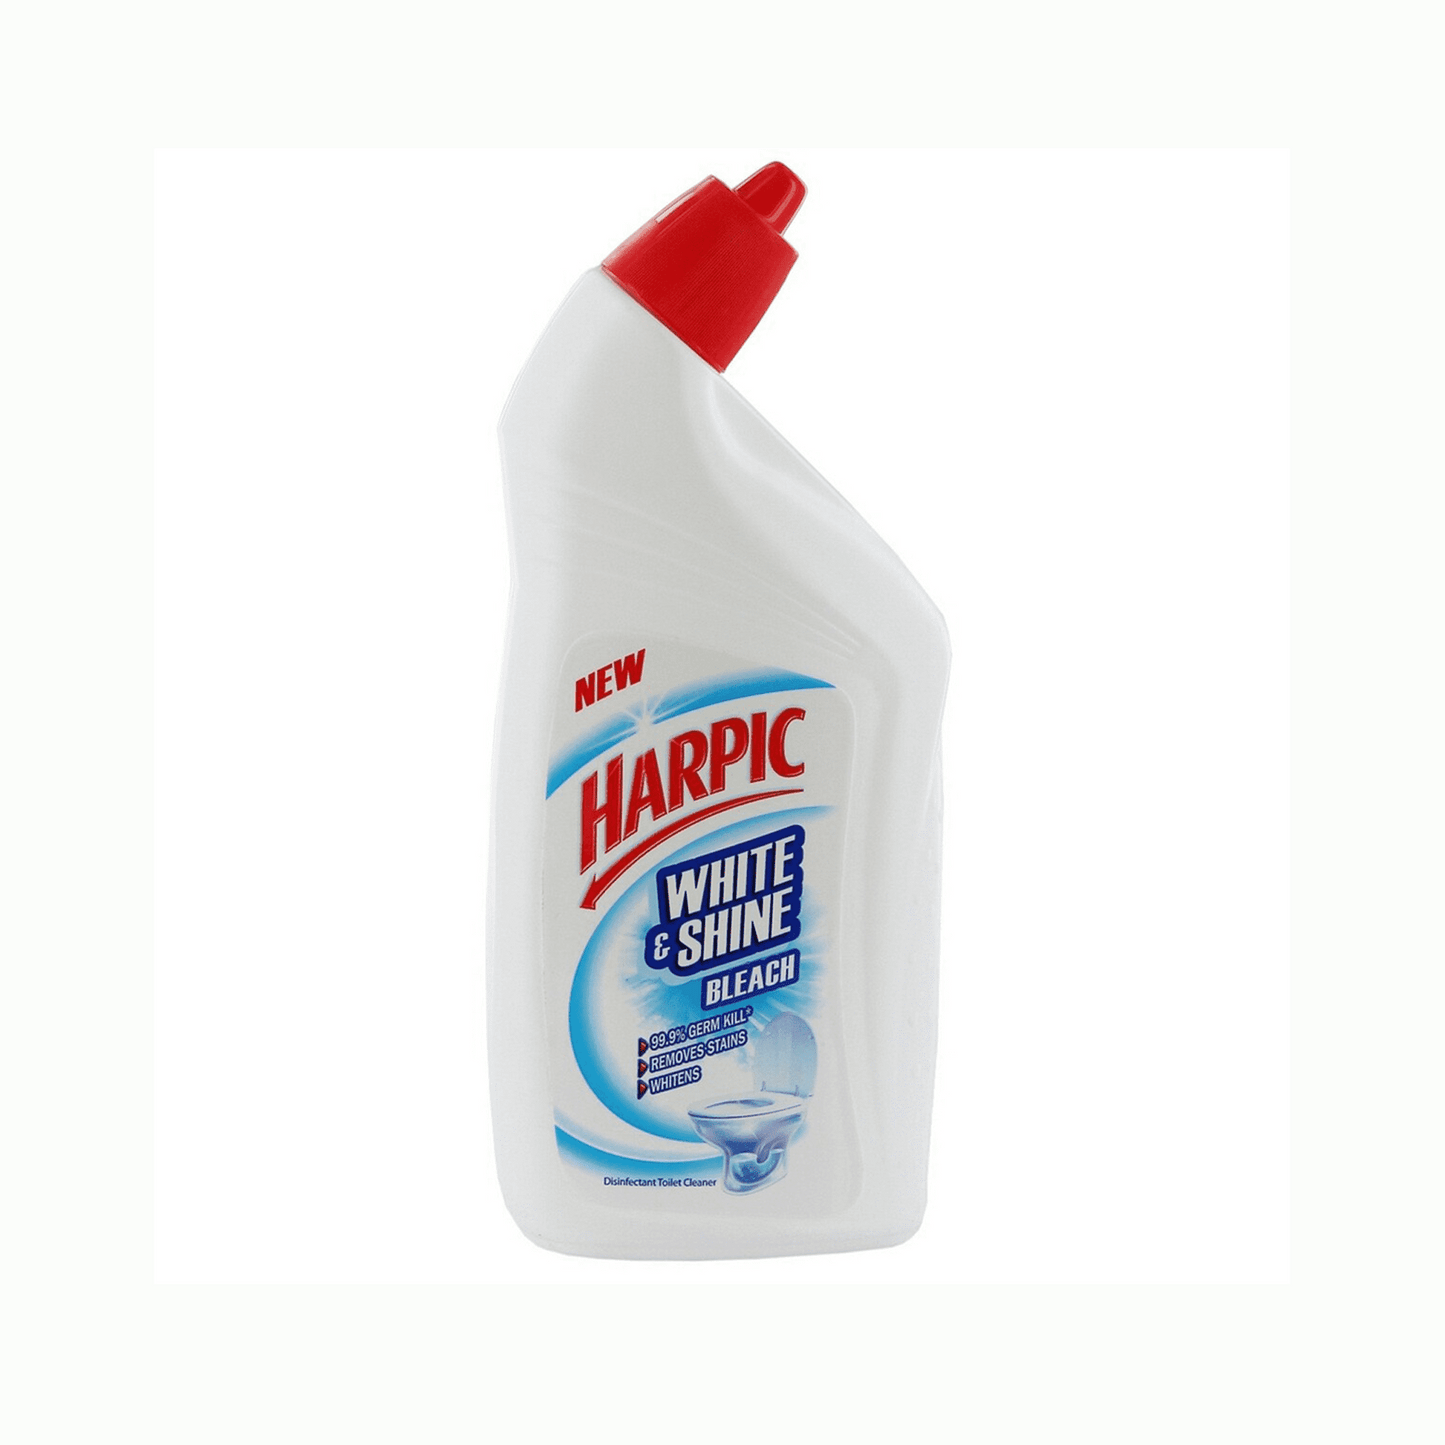 Harpic Disinfectant Toilet Cleaner - White & Shine Bleach.